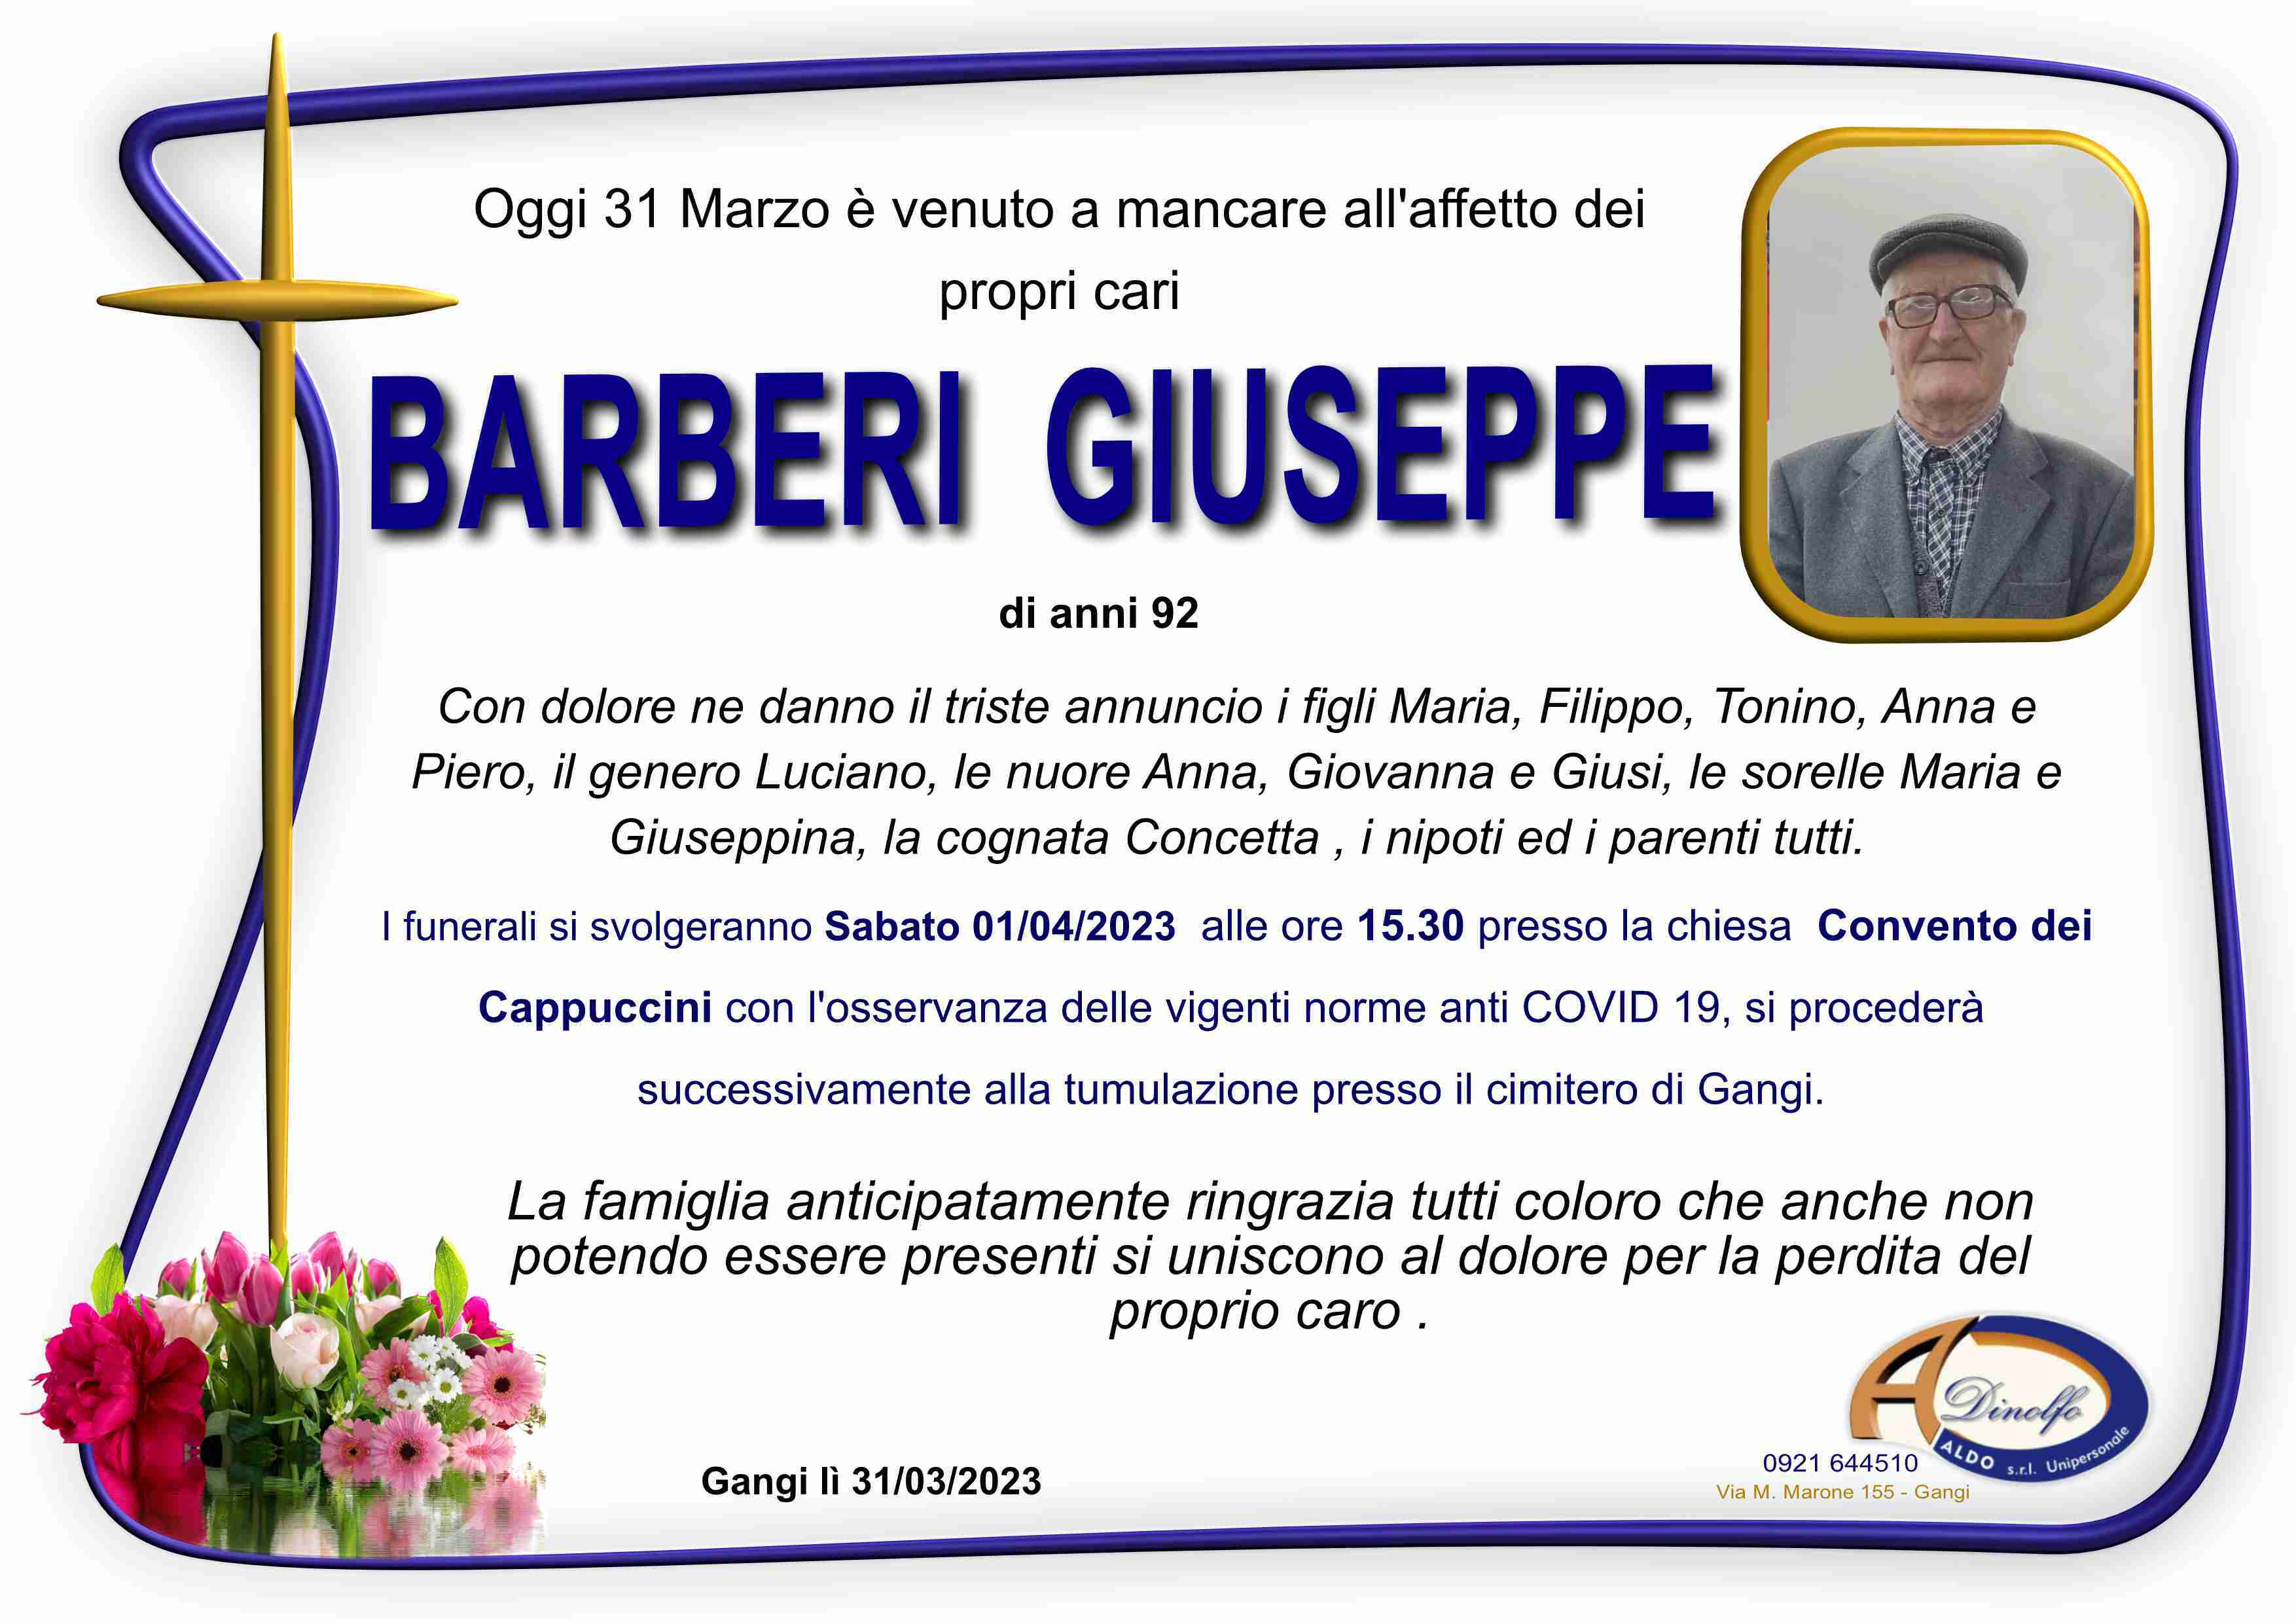 Giuseppe Barberi